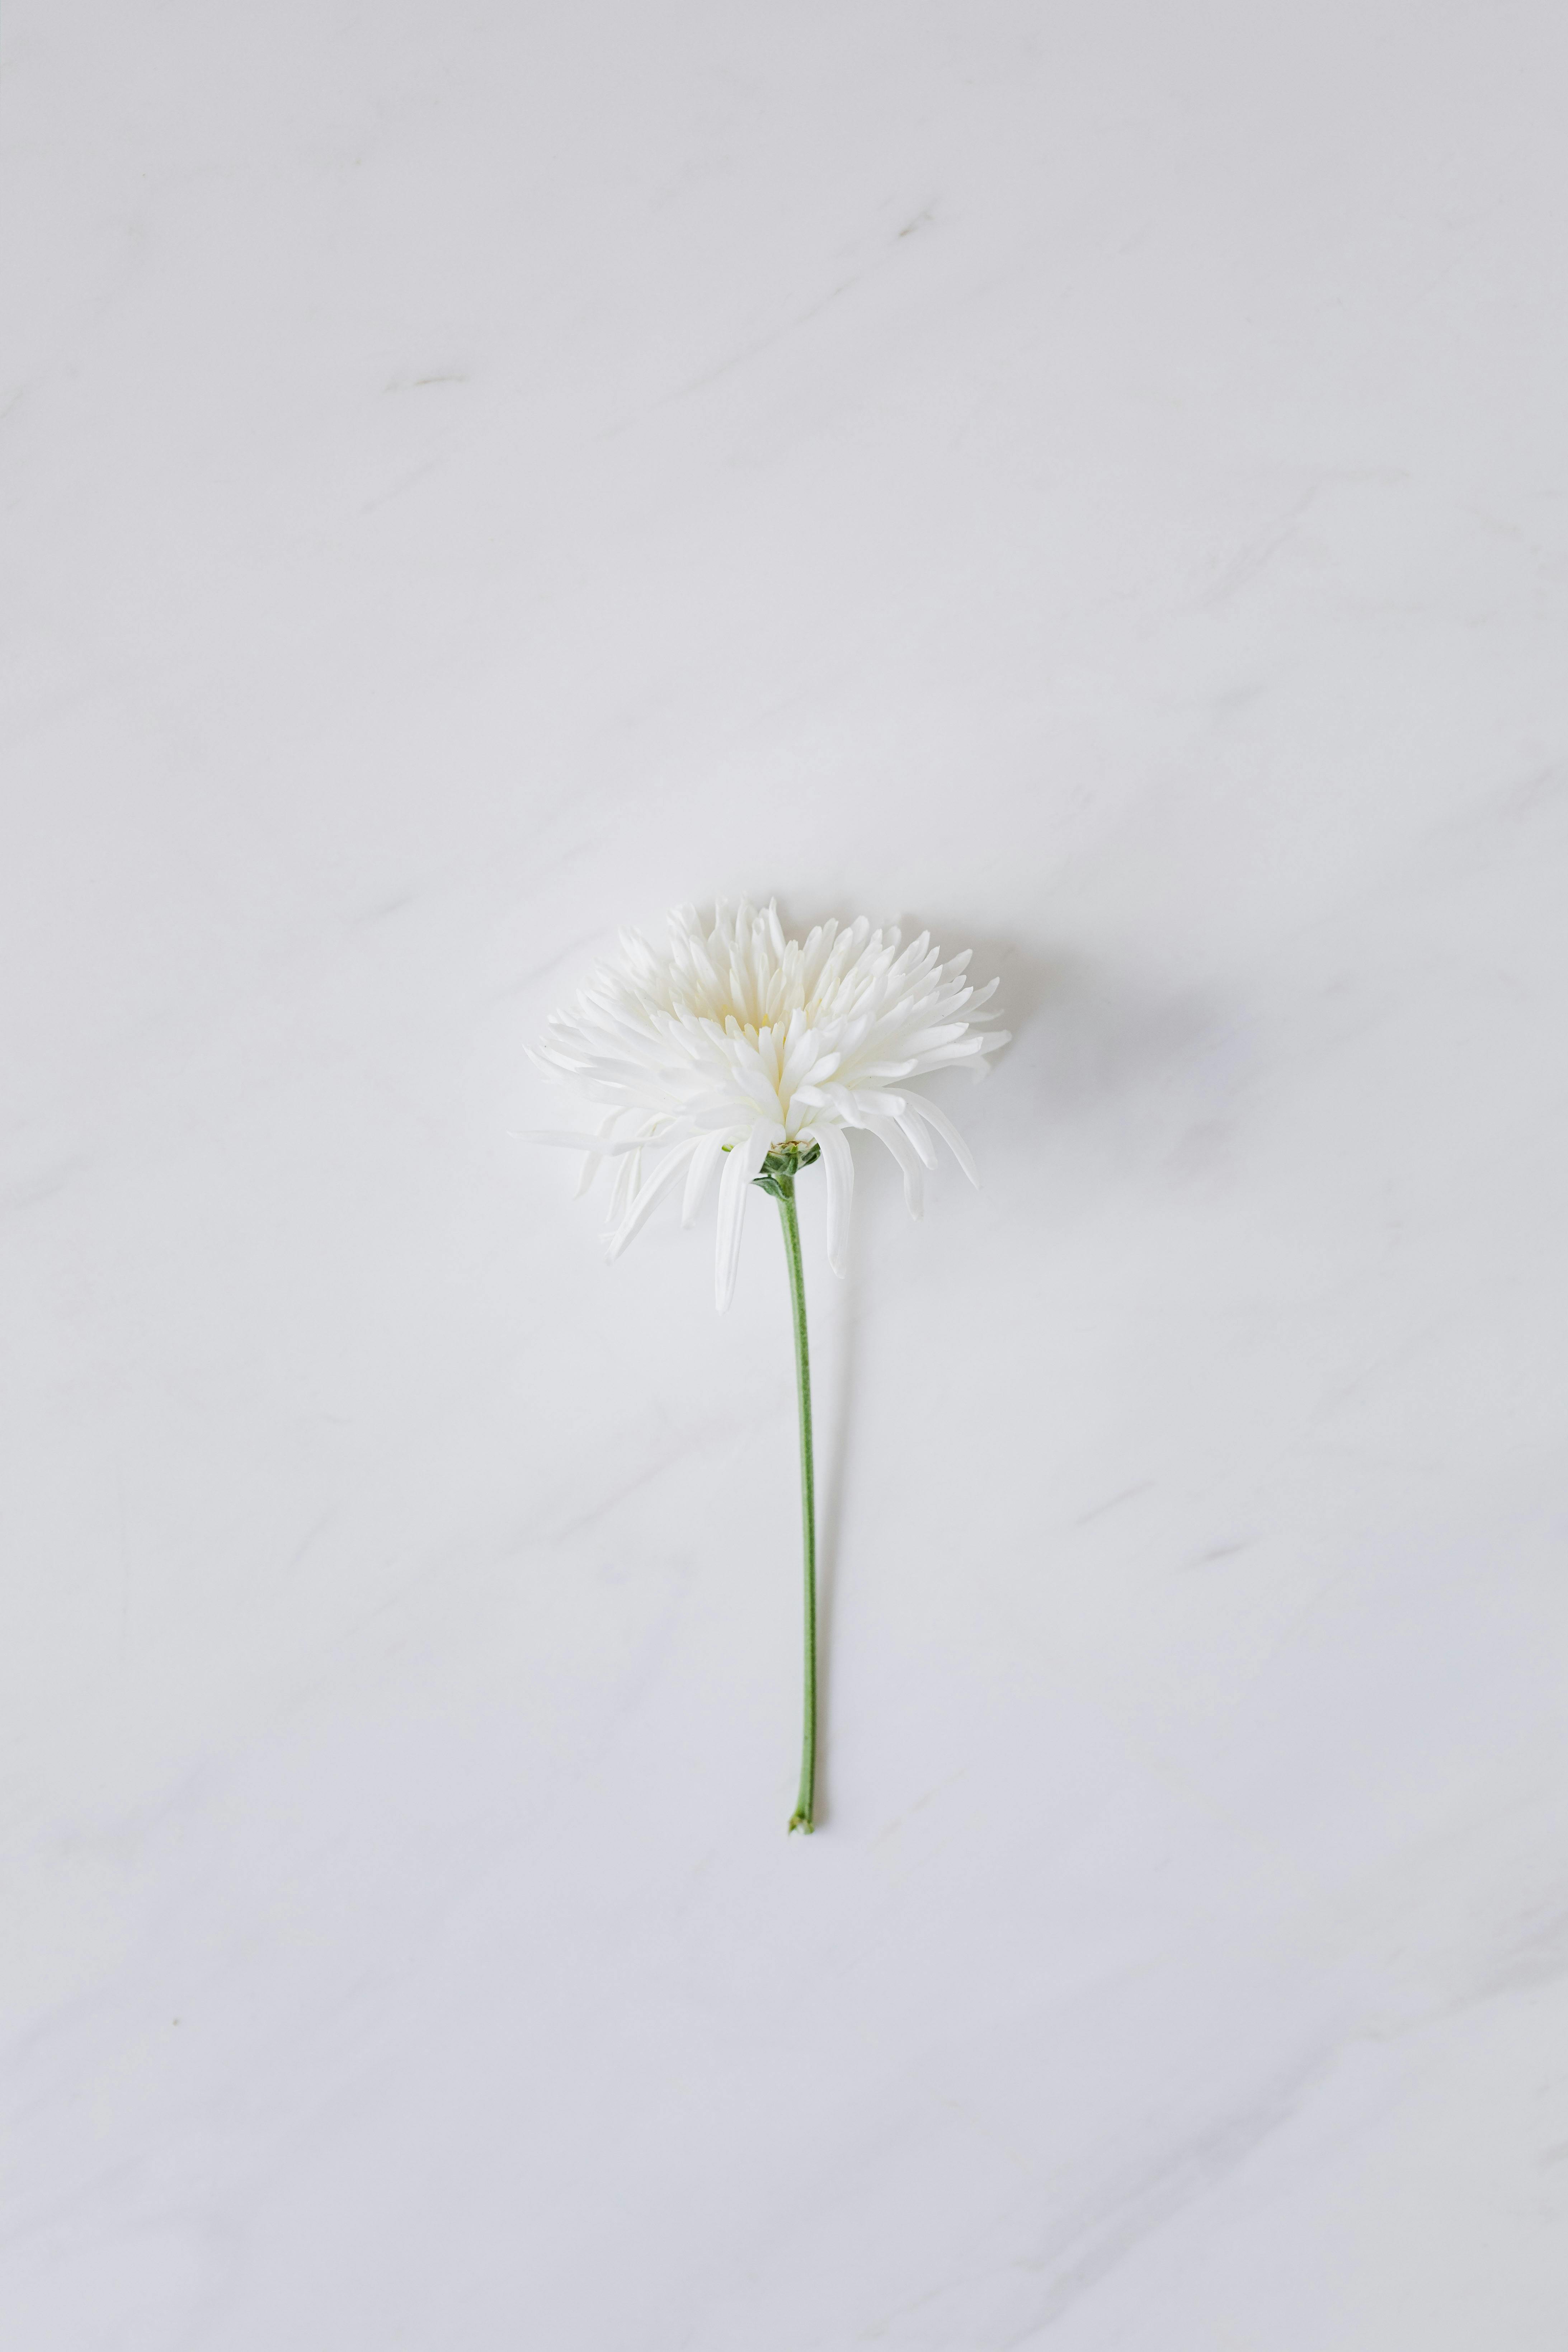 White Flower on a White Background · Free Stock Photo